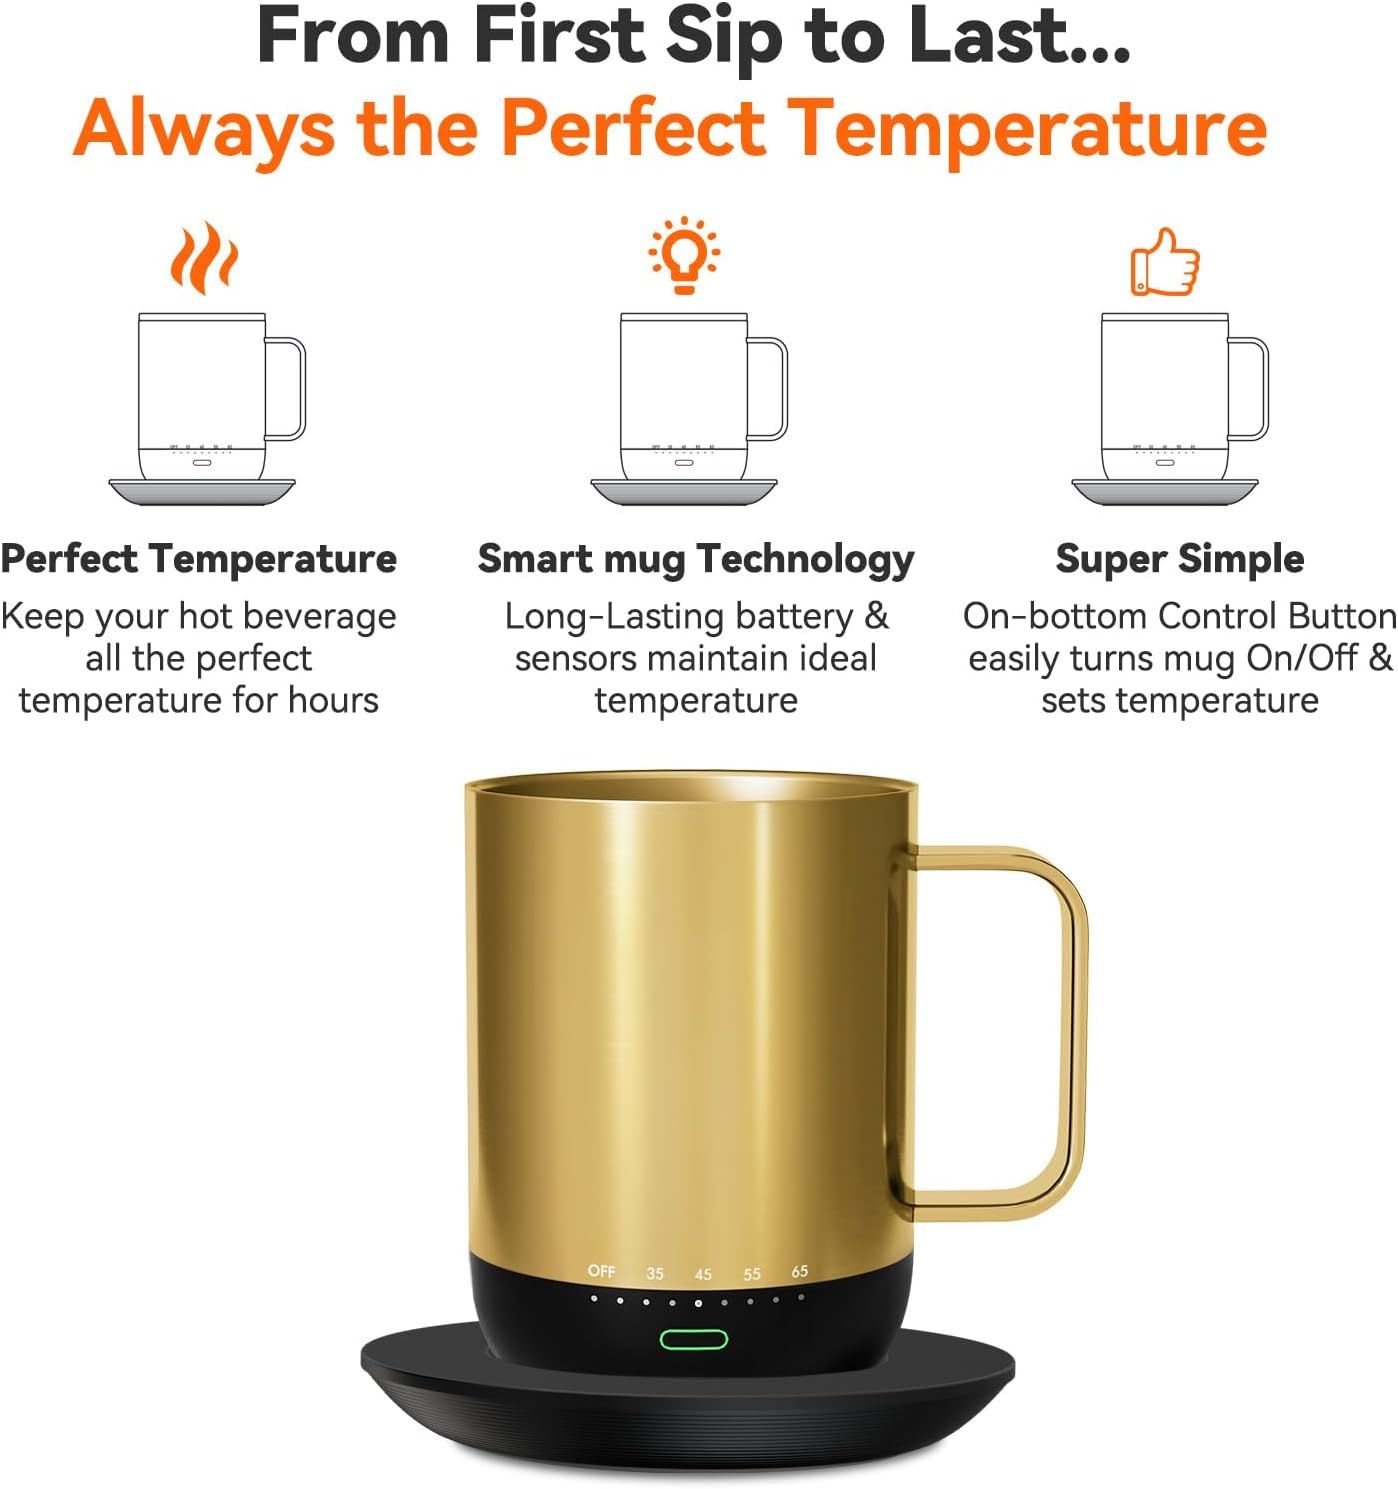 vsitoo S3 Temperature Control Smart Mug 2 with Lid, Self Heating Coffee Mug  10 oz, LED Display, 90 Min Battery Life - App&Manual Controlled Heated  Coffee Mug - Improved Design - Perfect Coffee Gifts 